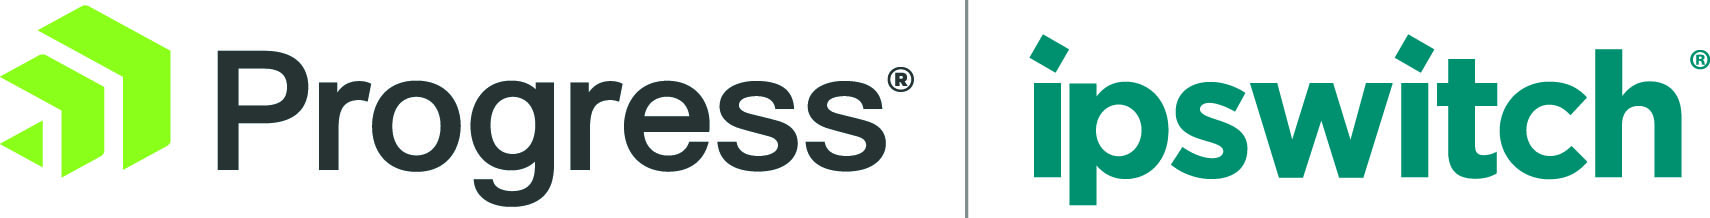 Progress Ipswitch Logo